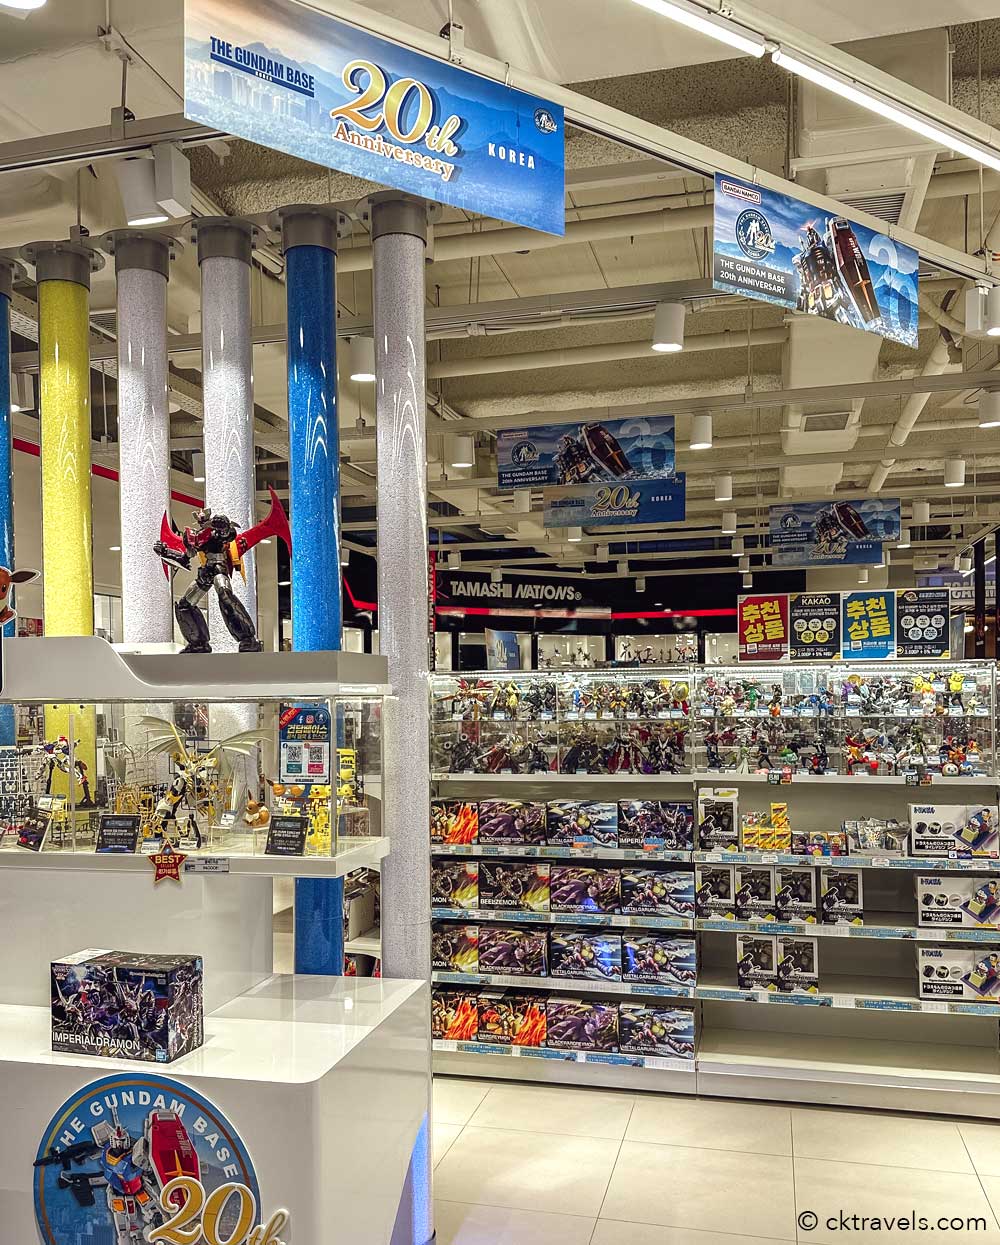 Gundam Shops in Busan